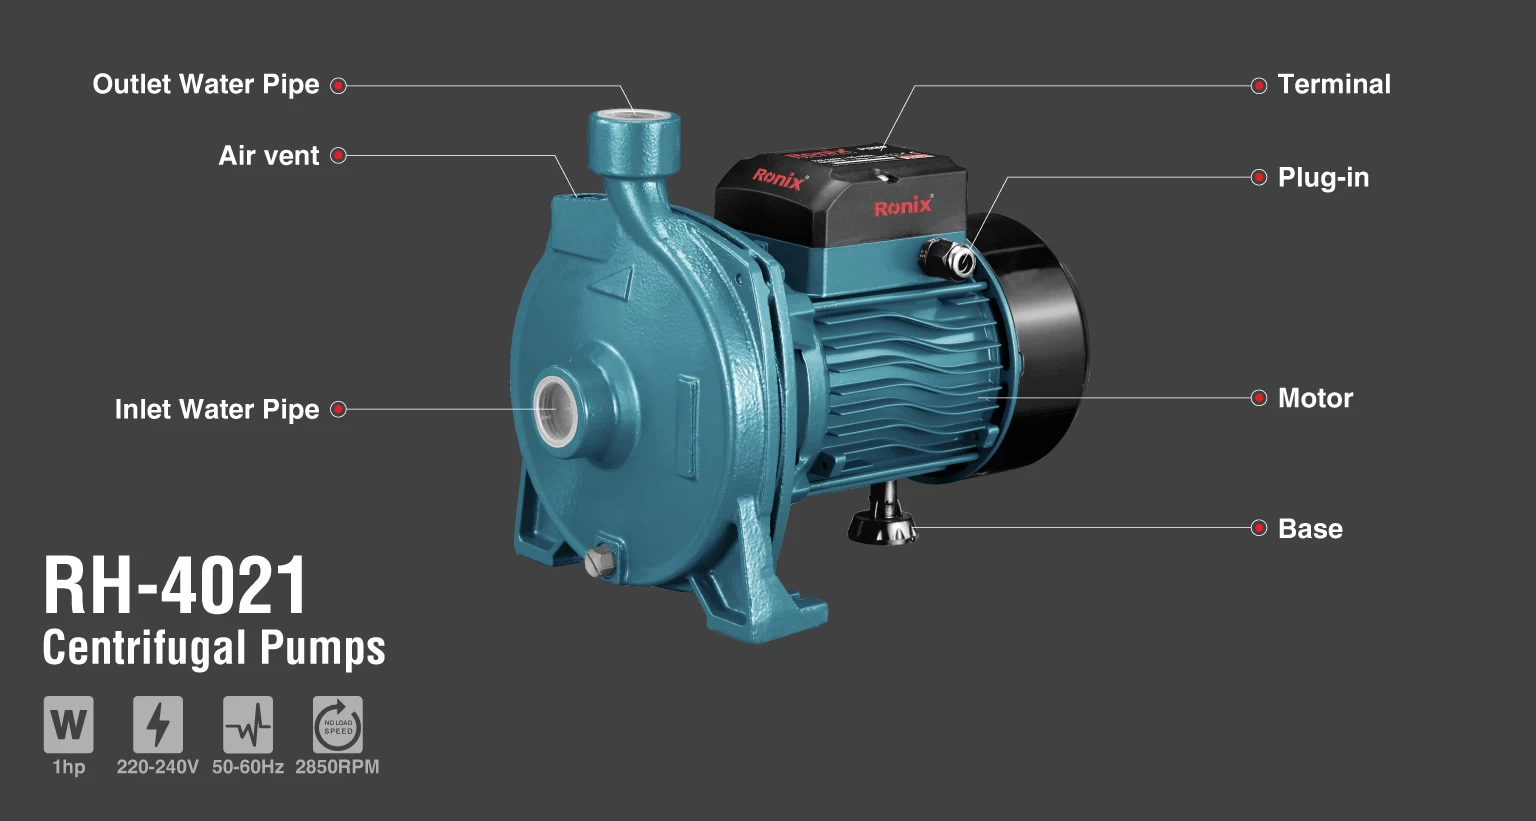 Centrifugal pumps 1 hp_details